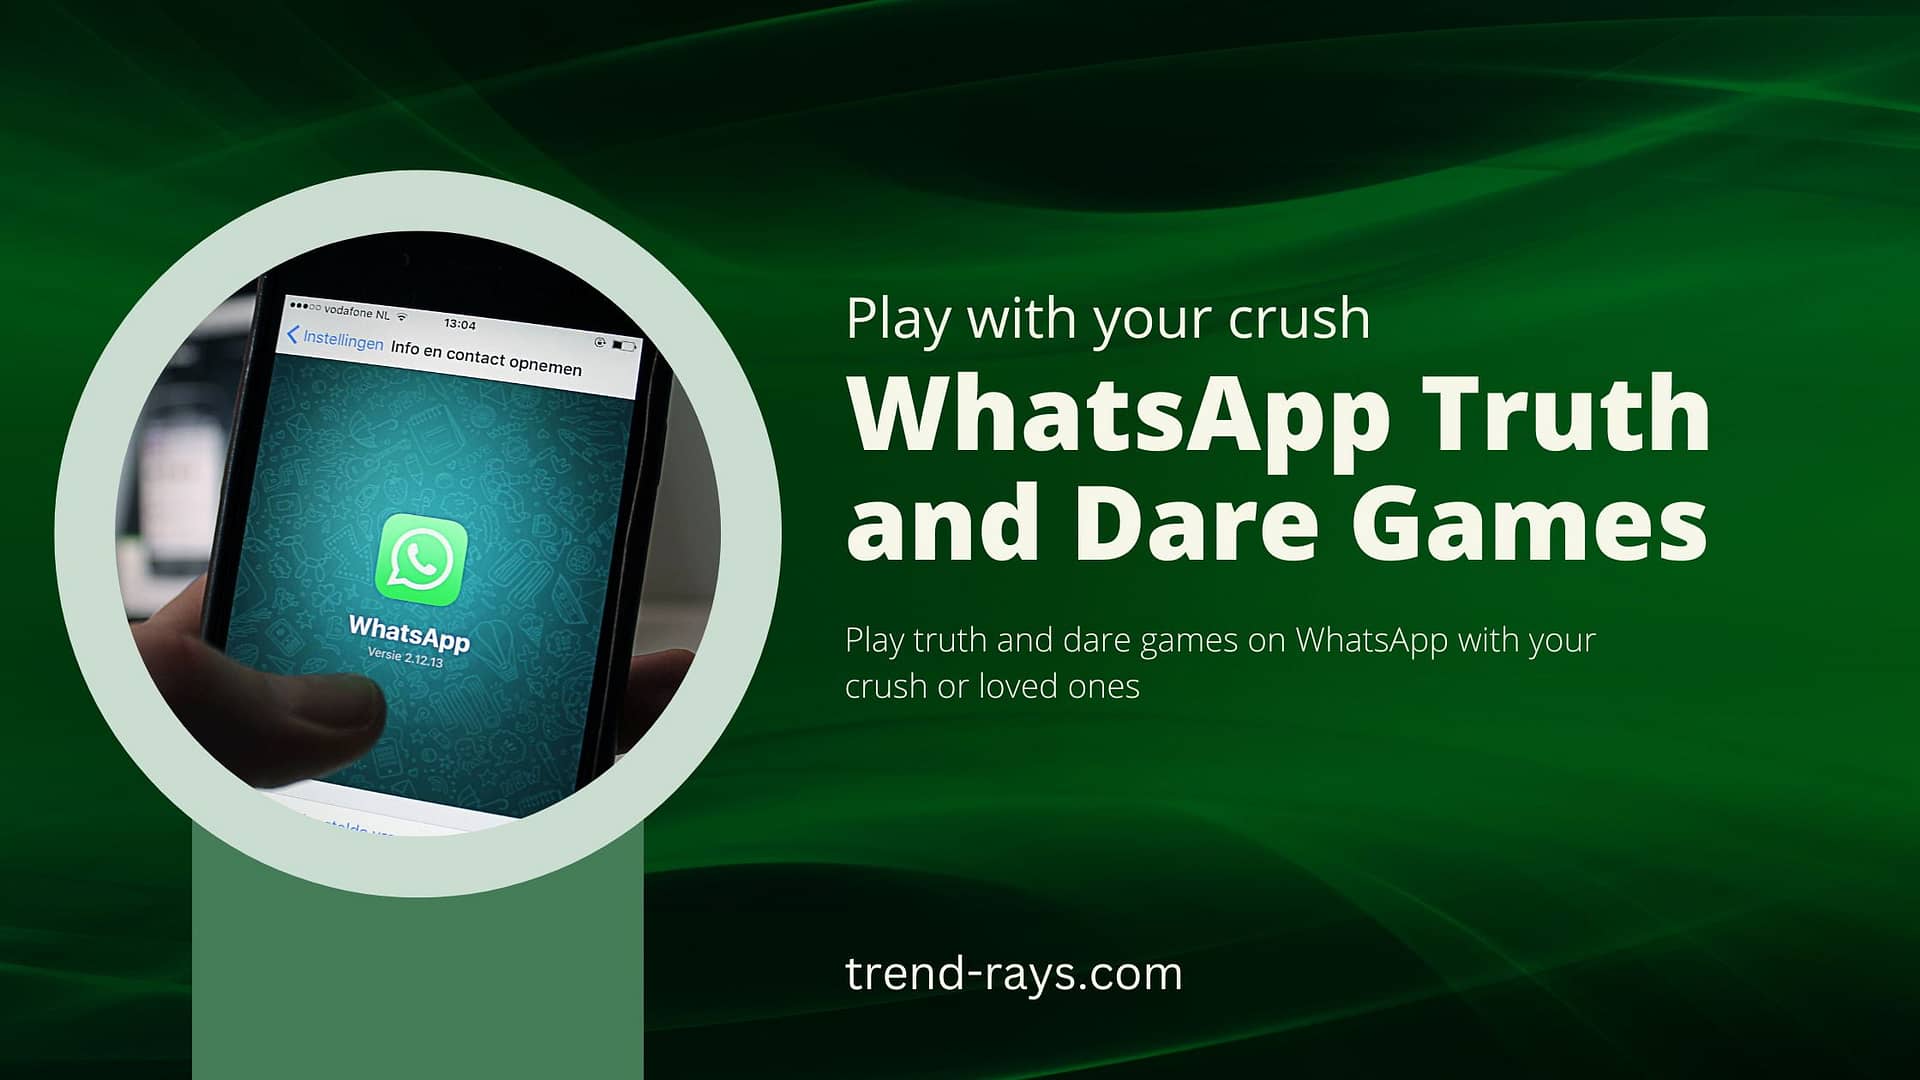 WhatsApp Truth and Dare Games